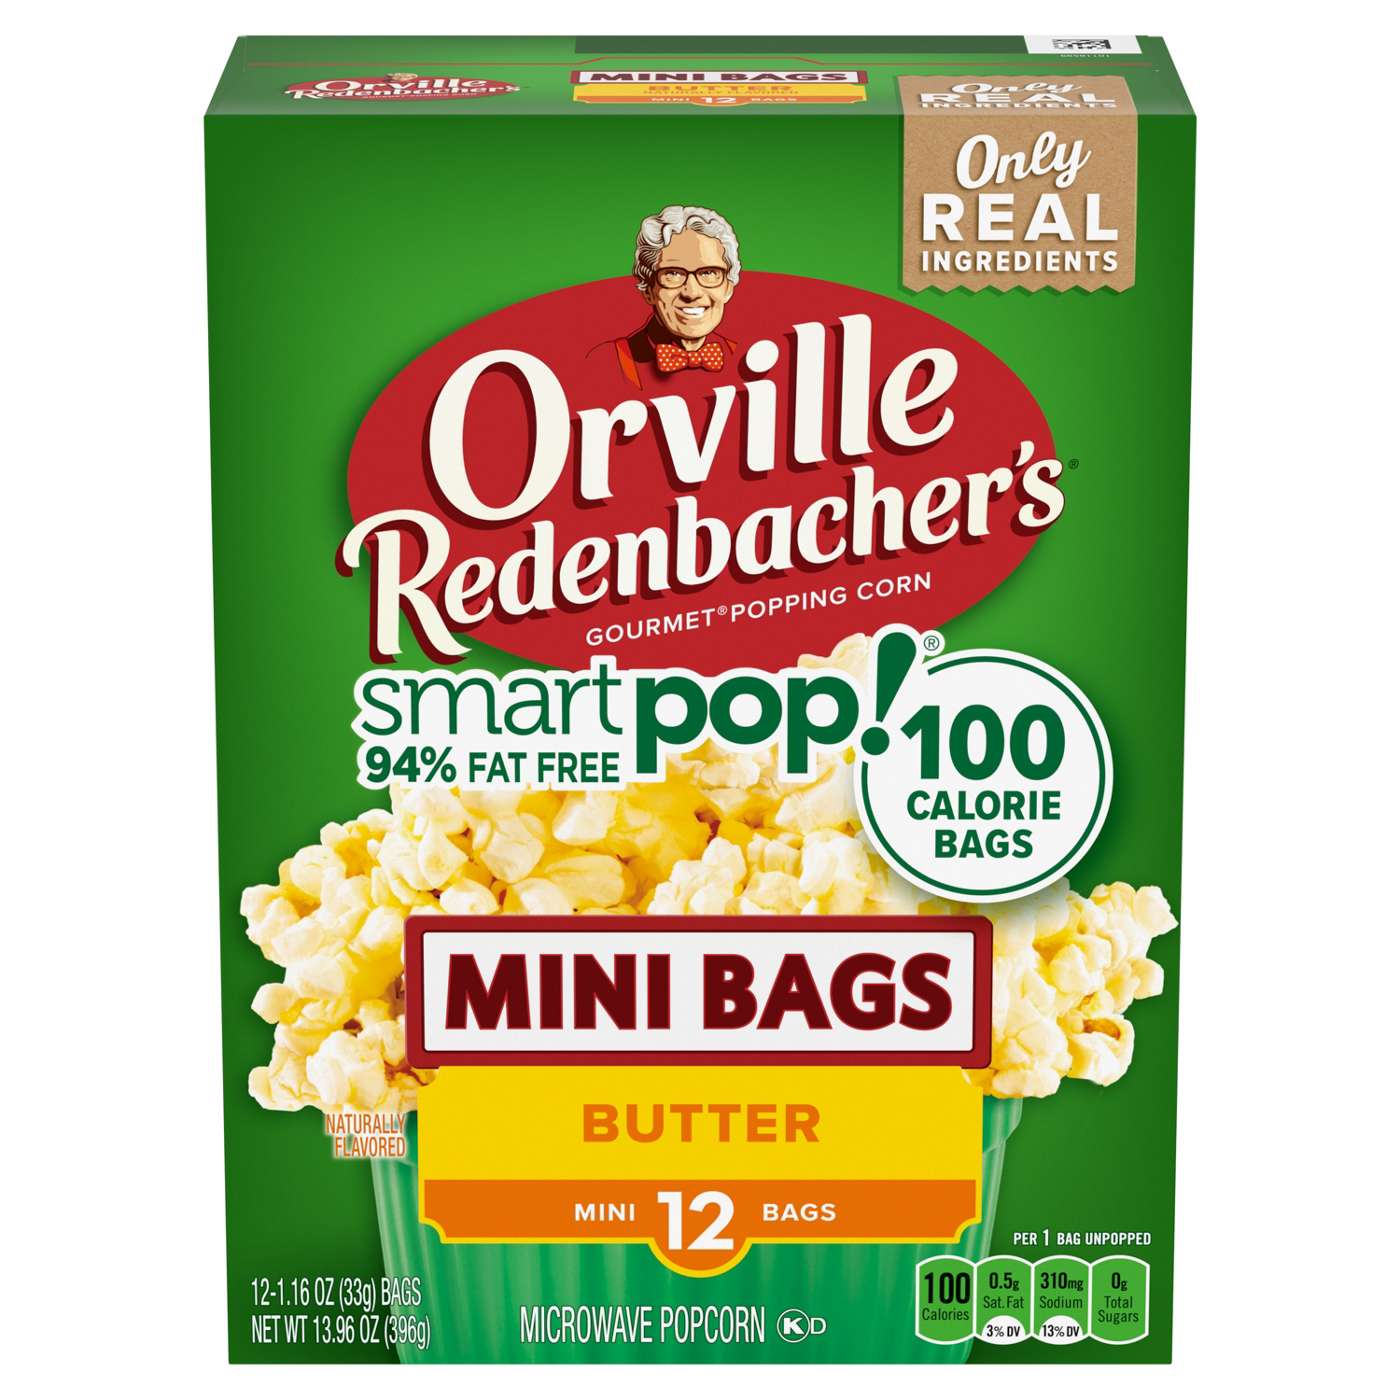 Orville Redenbacher's SmartPop! Butter Microwave Popcorn; image 1 of 7